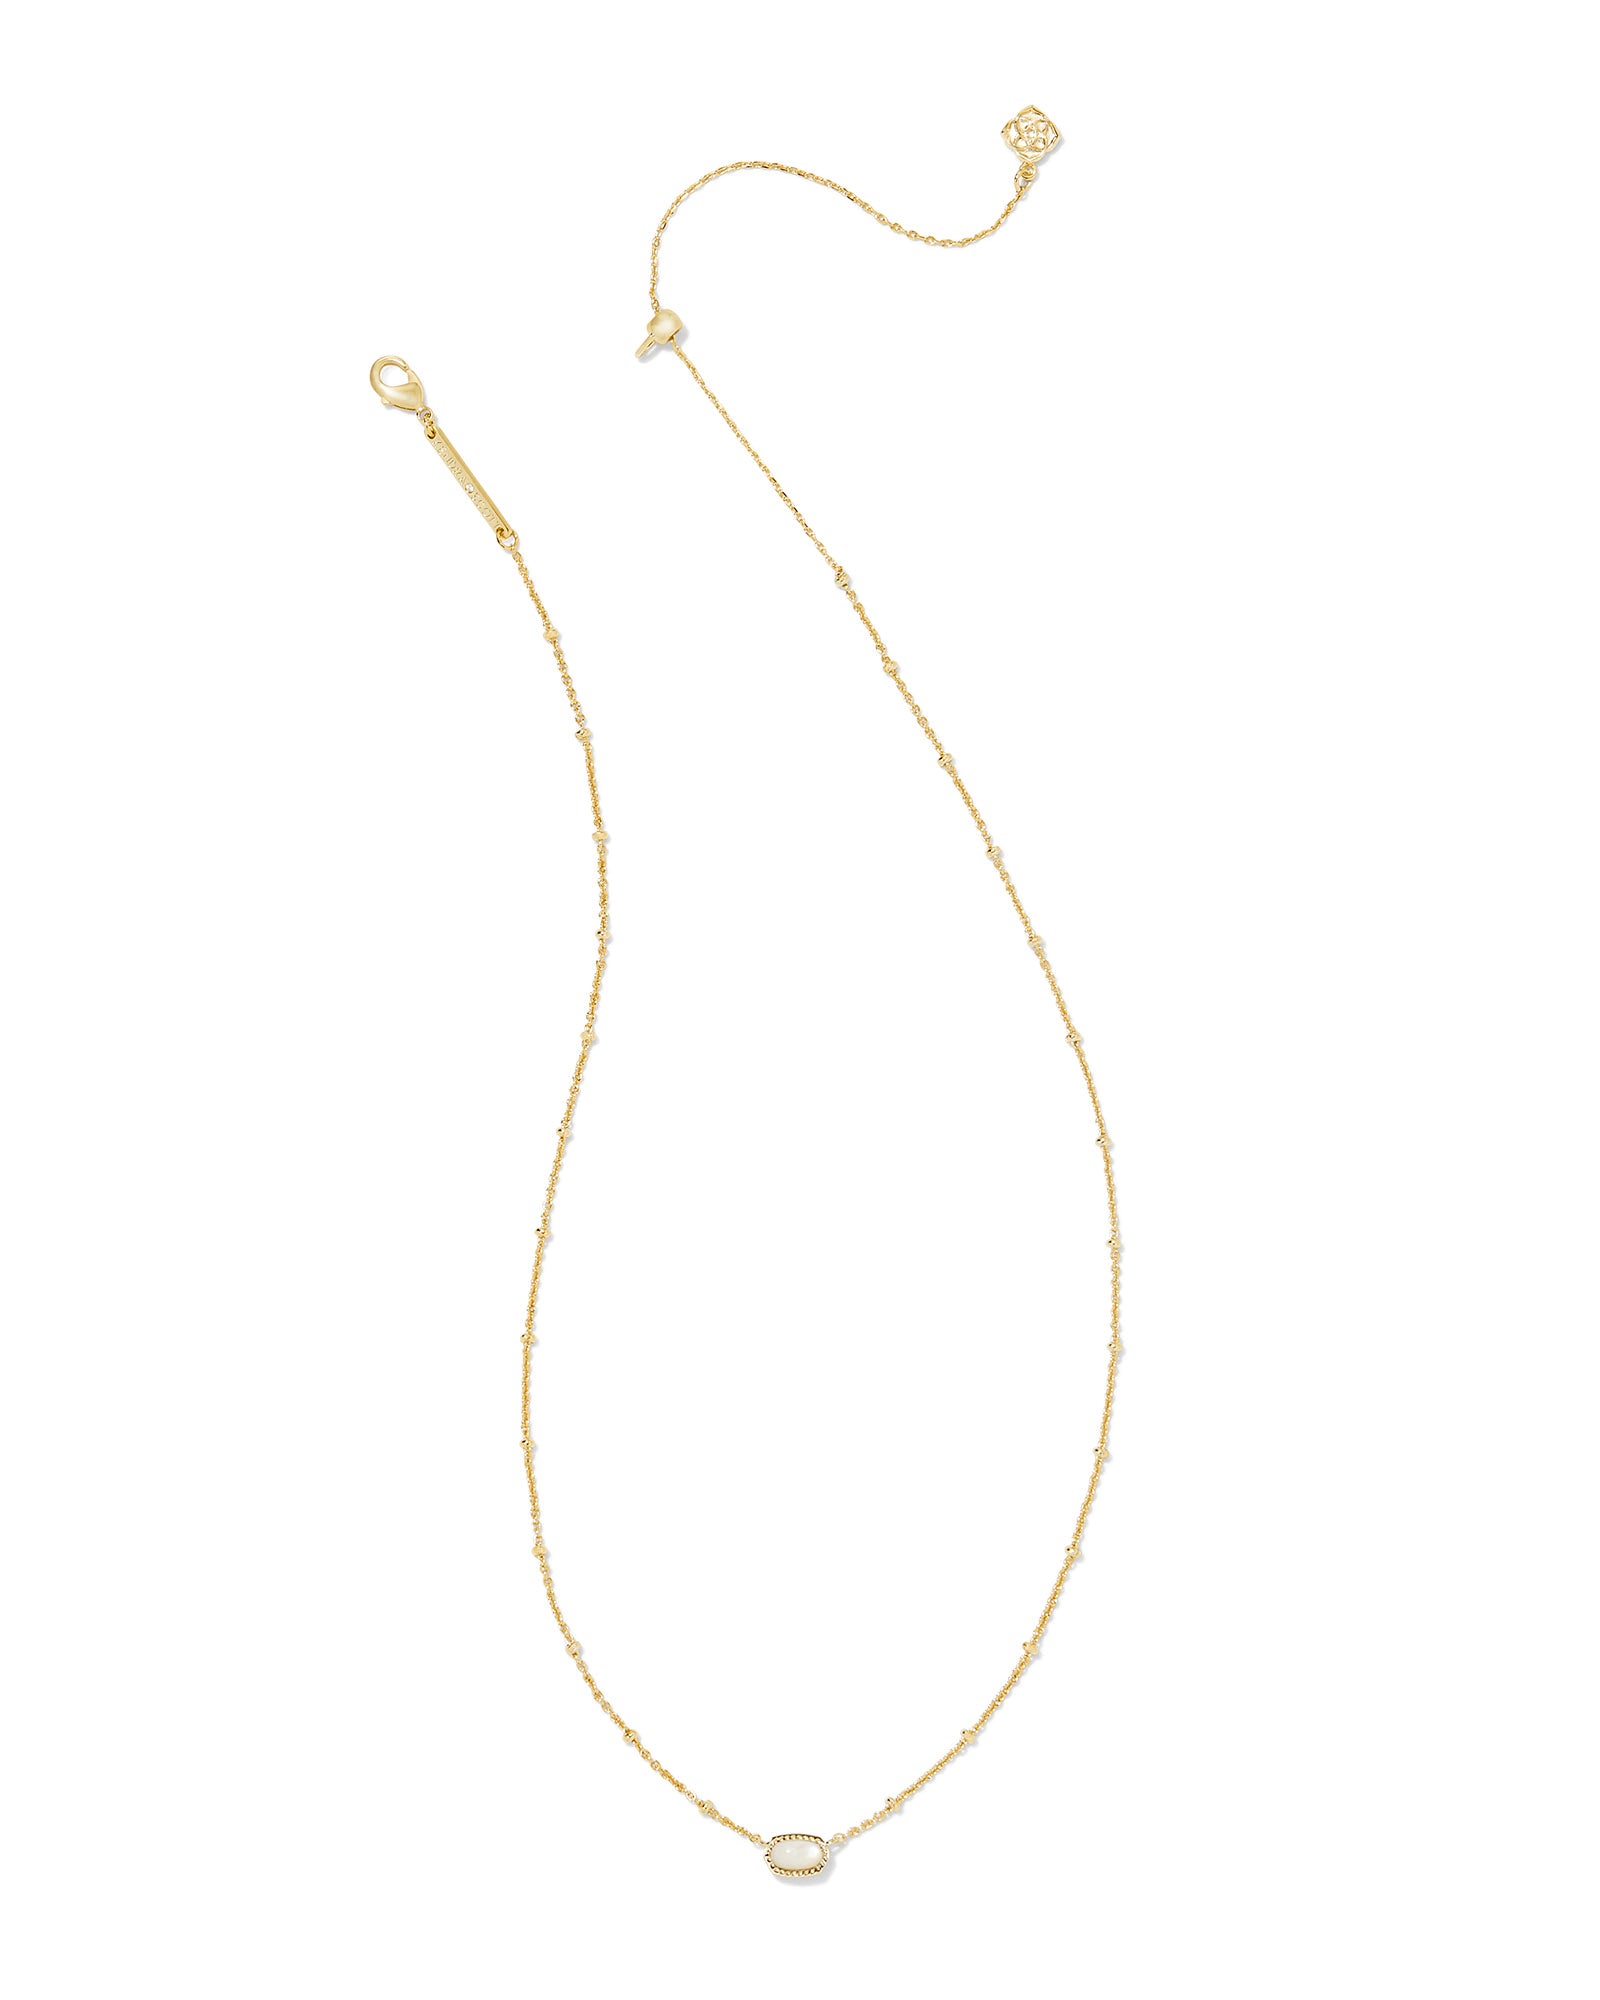 Kendra Scott Mini Elisa Gold Satellite Short Pendant Necklace - Ivory Mother-of-Pearl